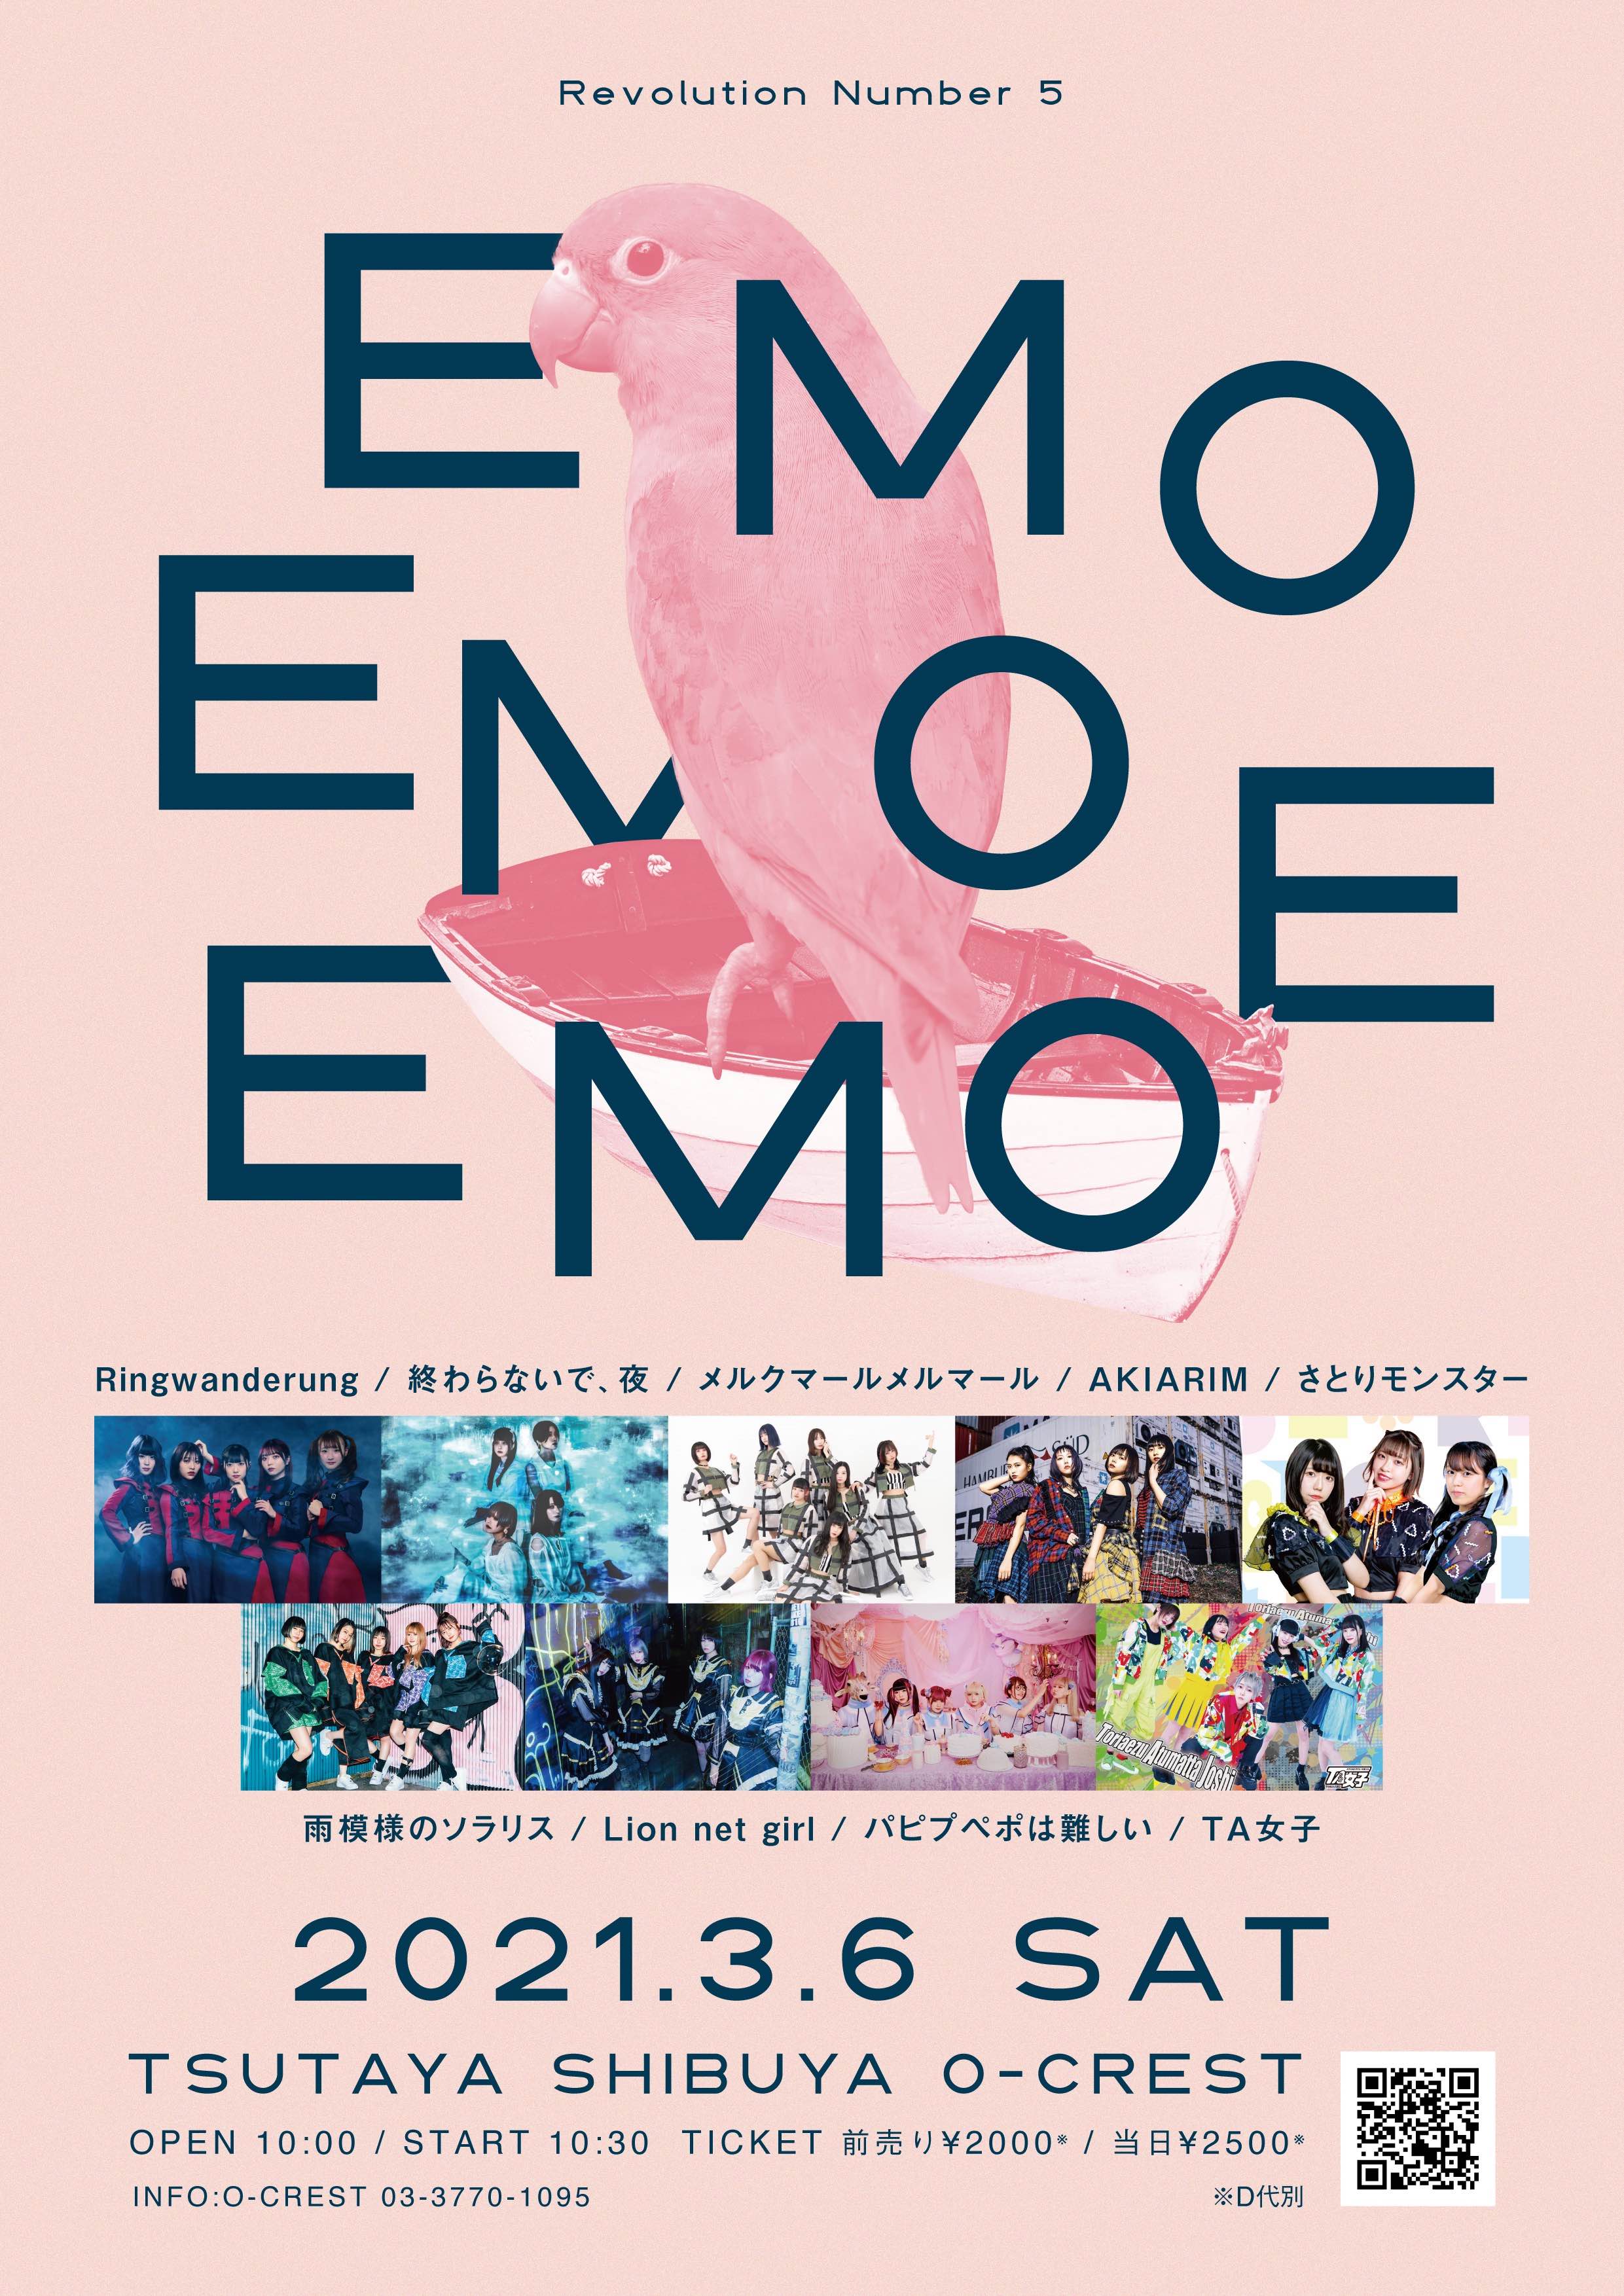 『emoemoemoe』   〜Revolution Number 5〜